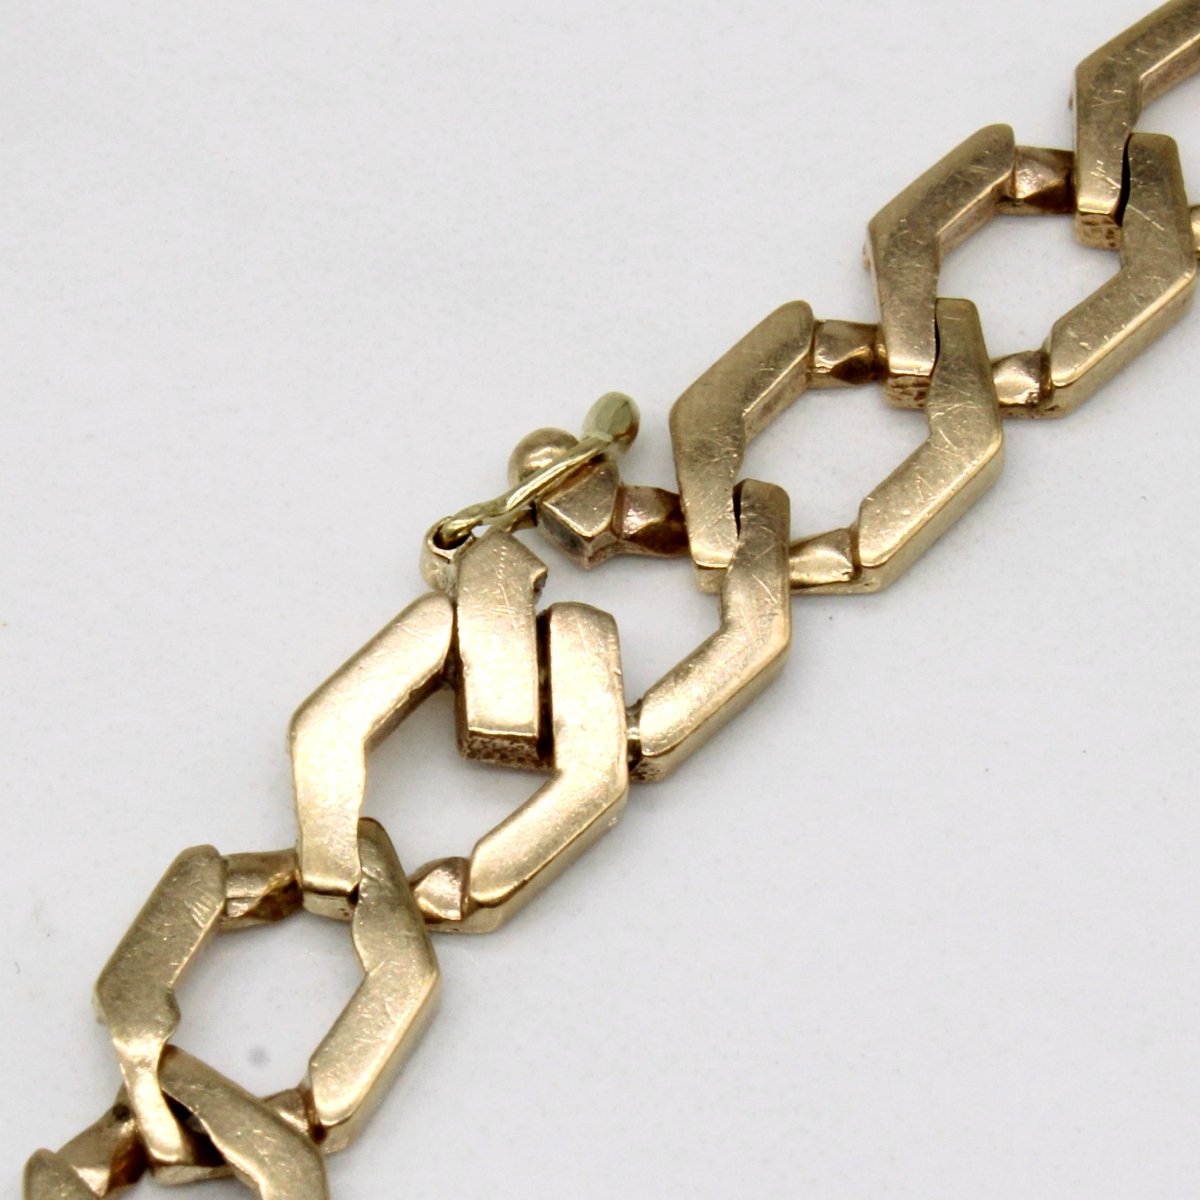 10k Yellow Gold Bracelet | 8